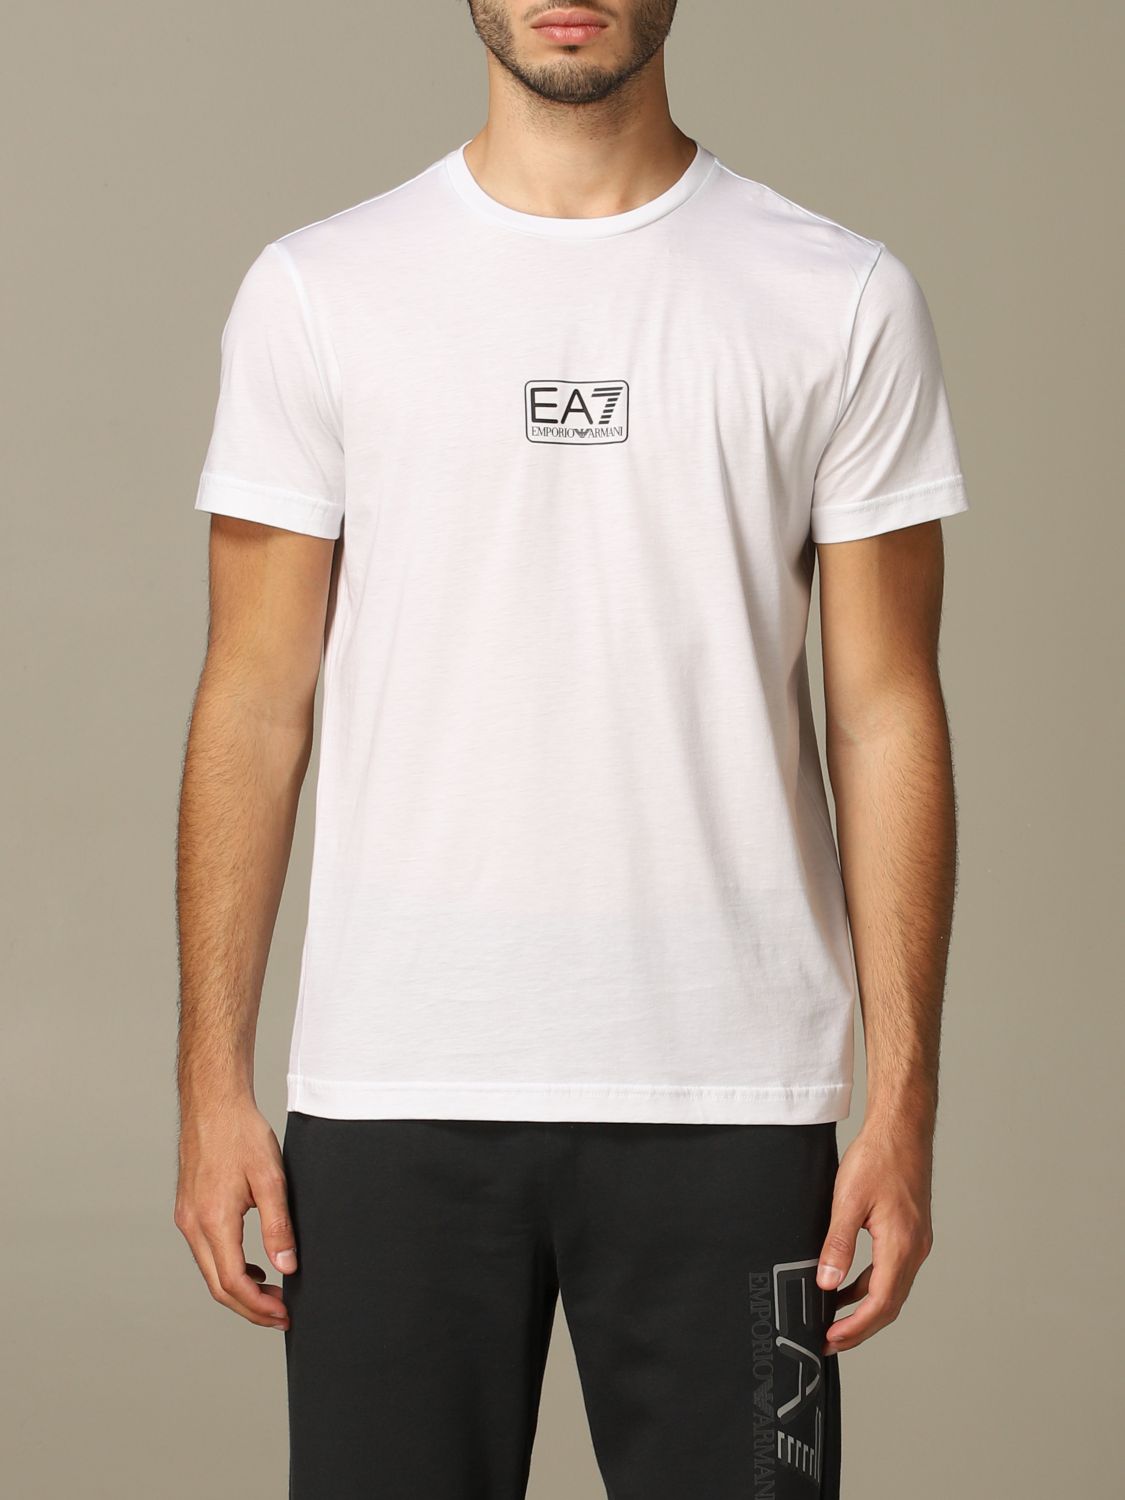 Ea7 Outlet: T-shirt men | T-Shirt Ea7 Men White | T-Shirt Ea7 8NPT11 ...